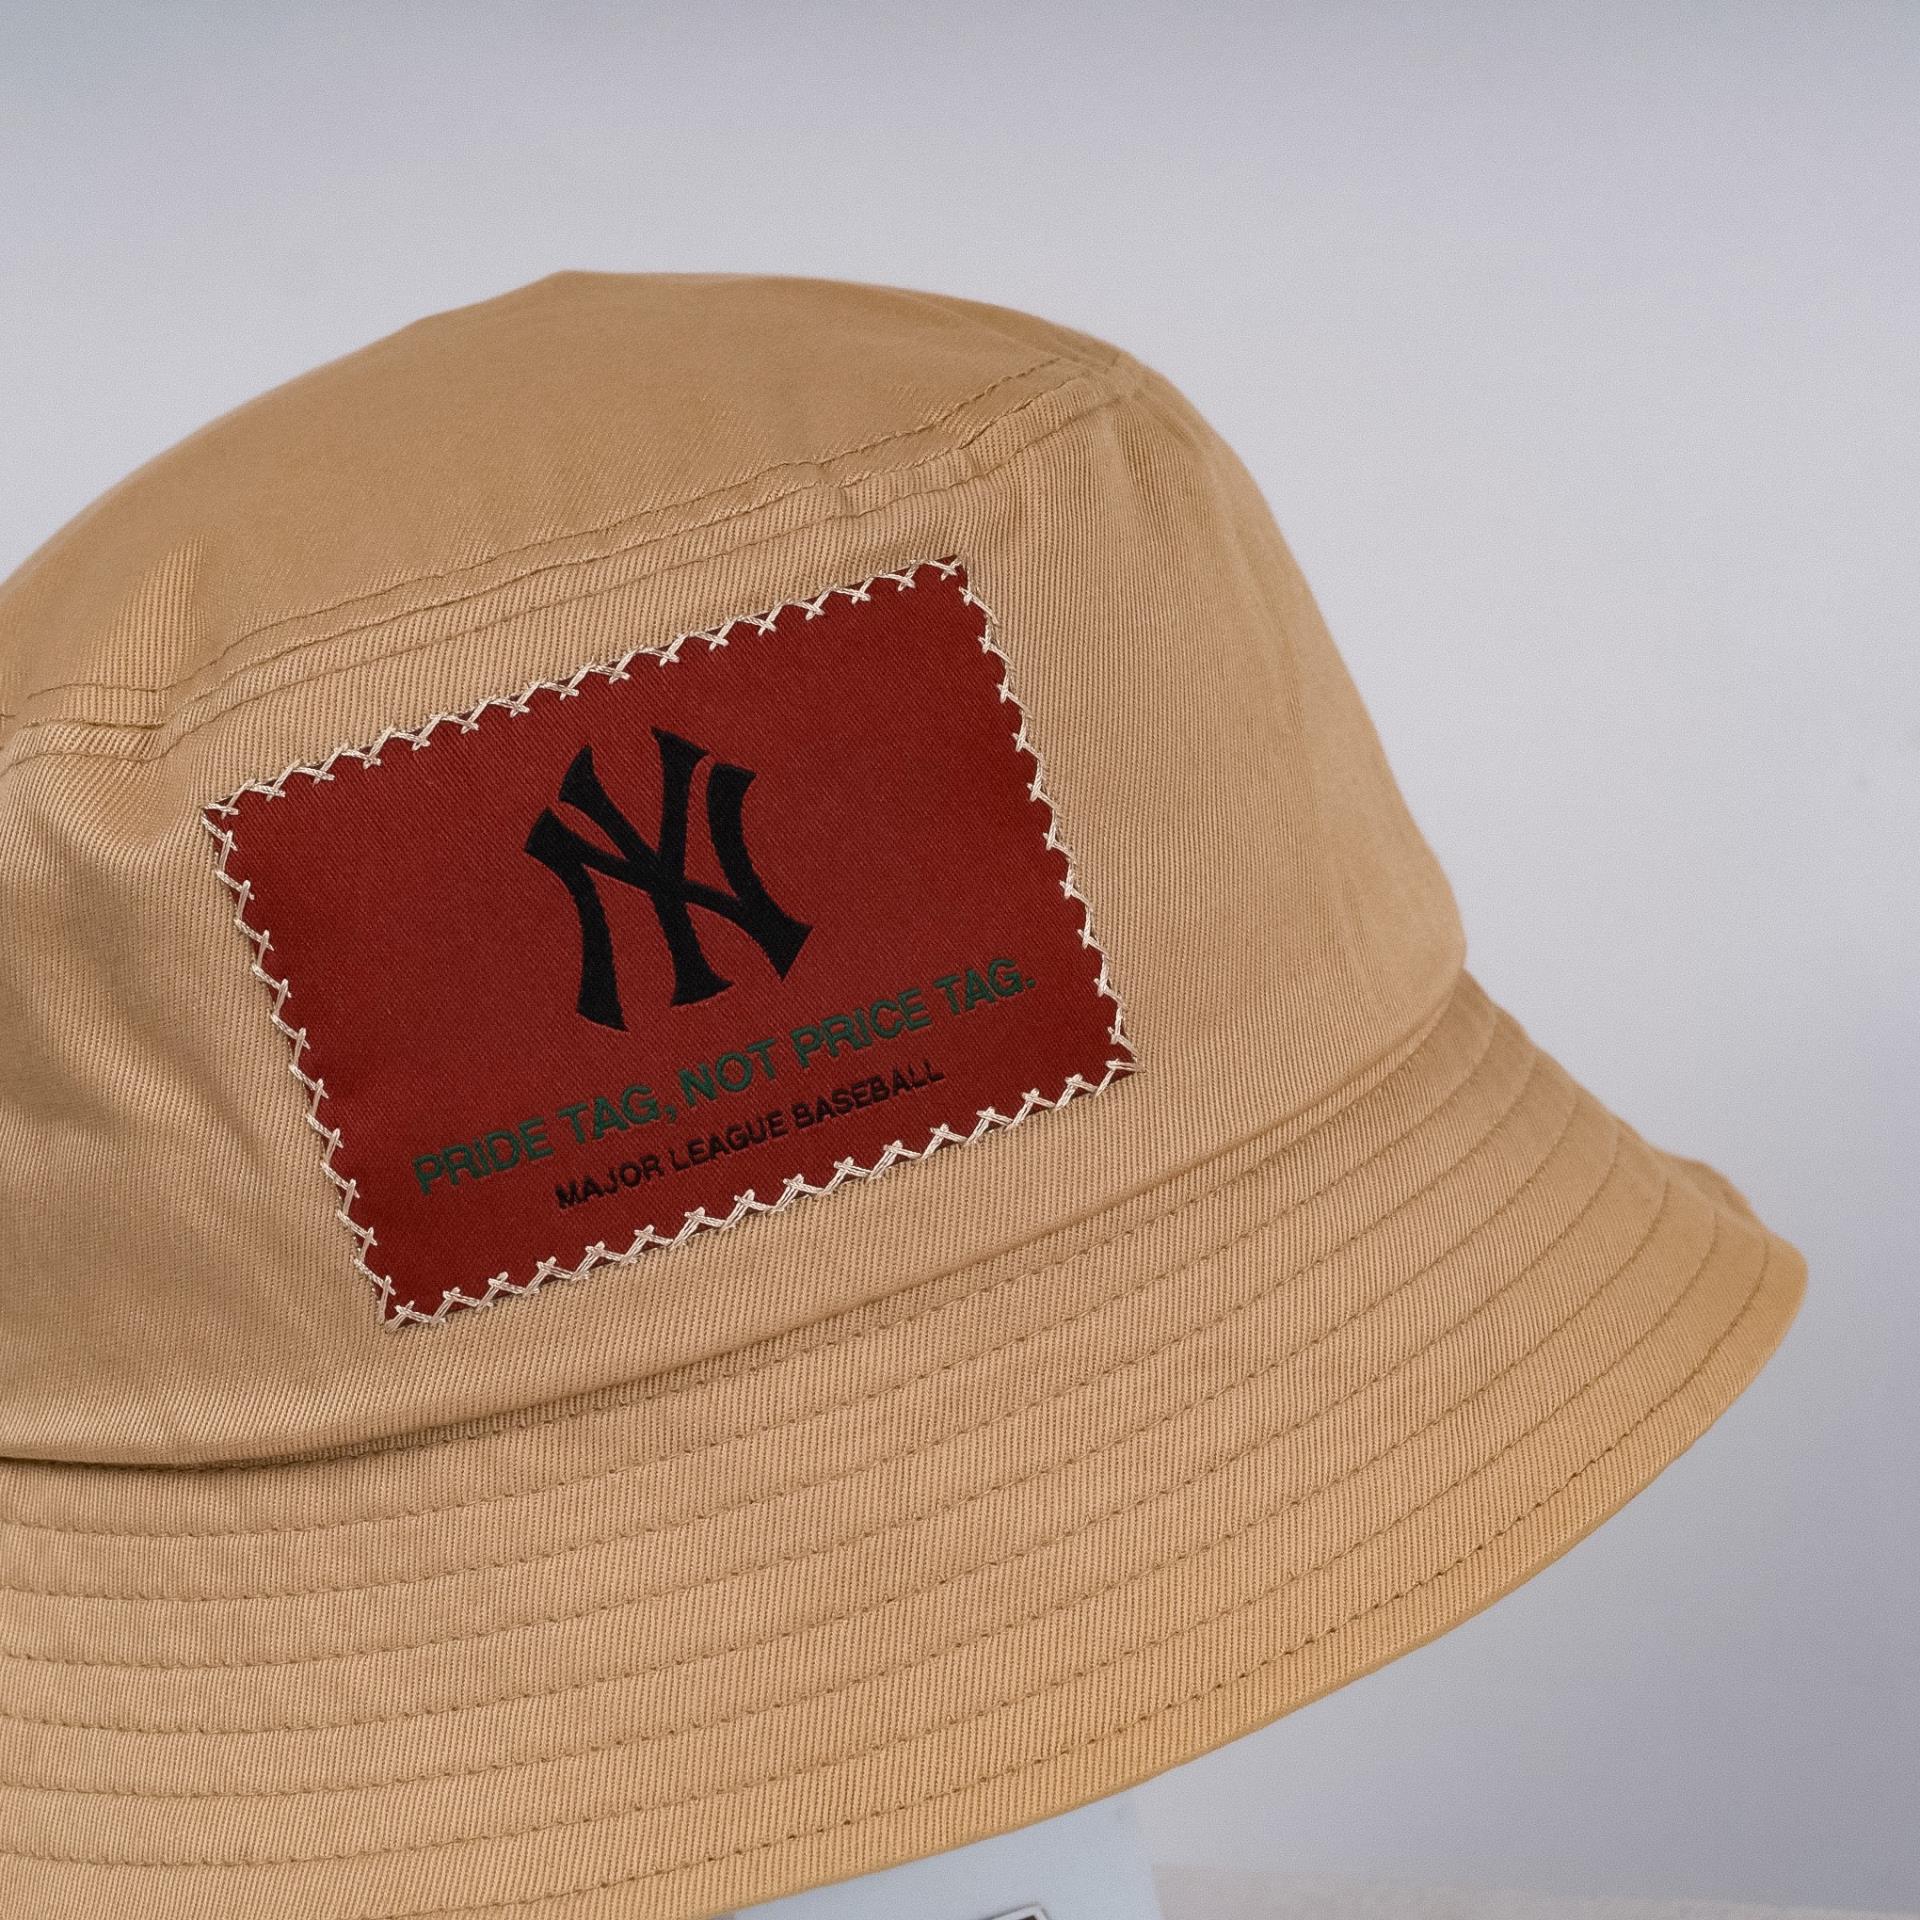 Carhartt x 47 MLB 2018 Hat Collection  Hypebeast